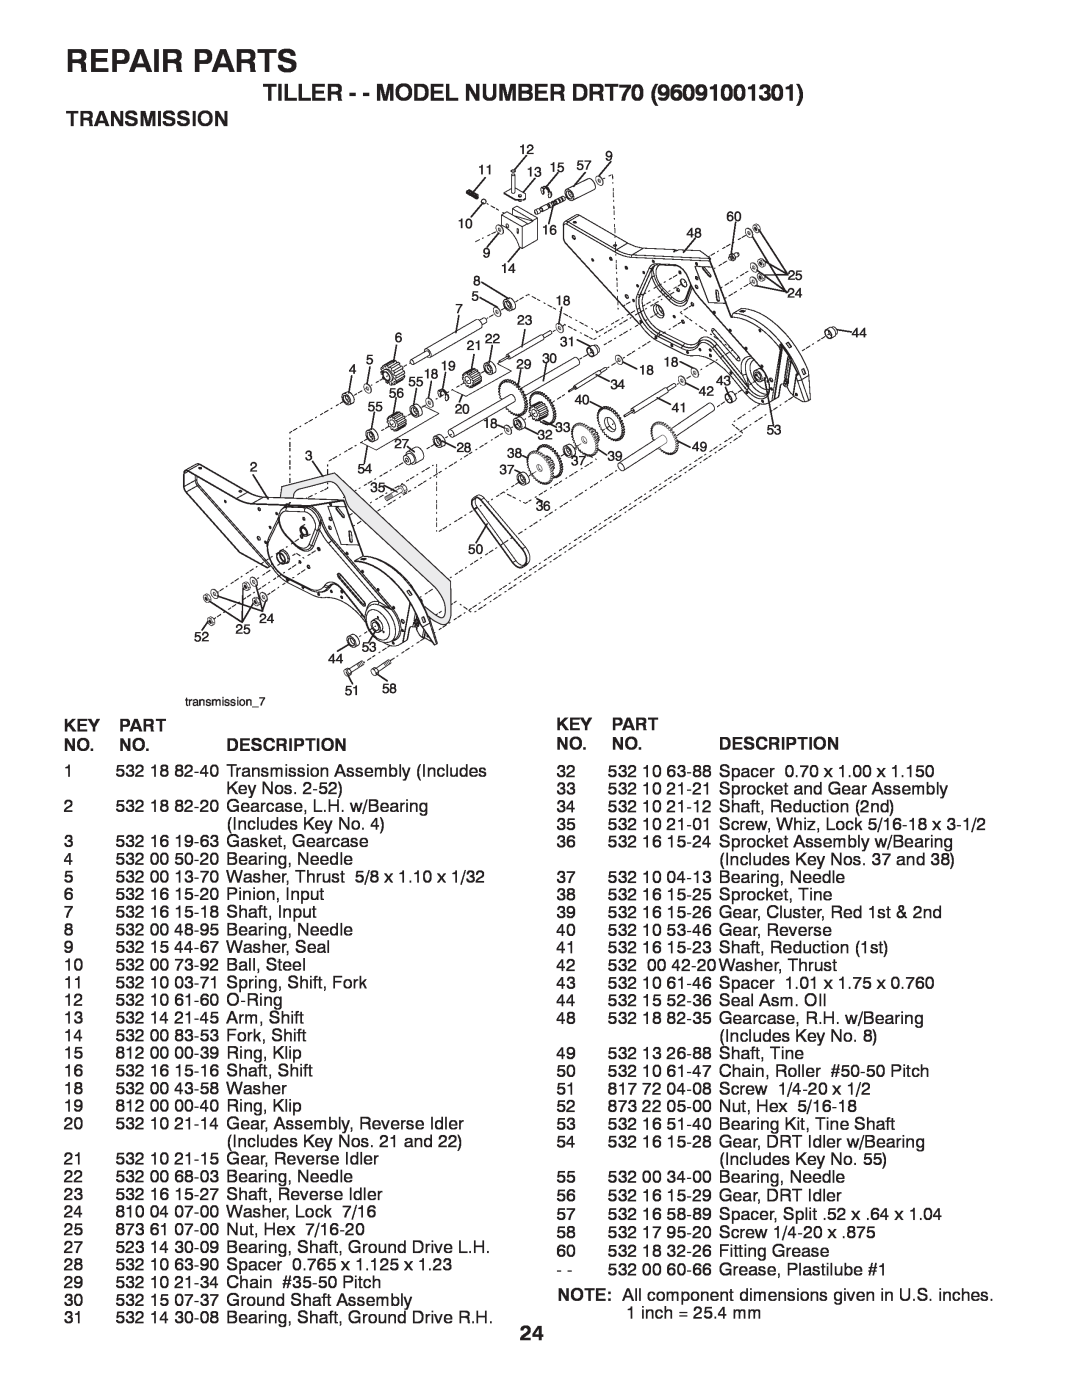 Husqvarna owner manual Repair Parts, TILLER - - MODEL NUMBER DRT70, Transmission, Key Part No. No. Description 